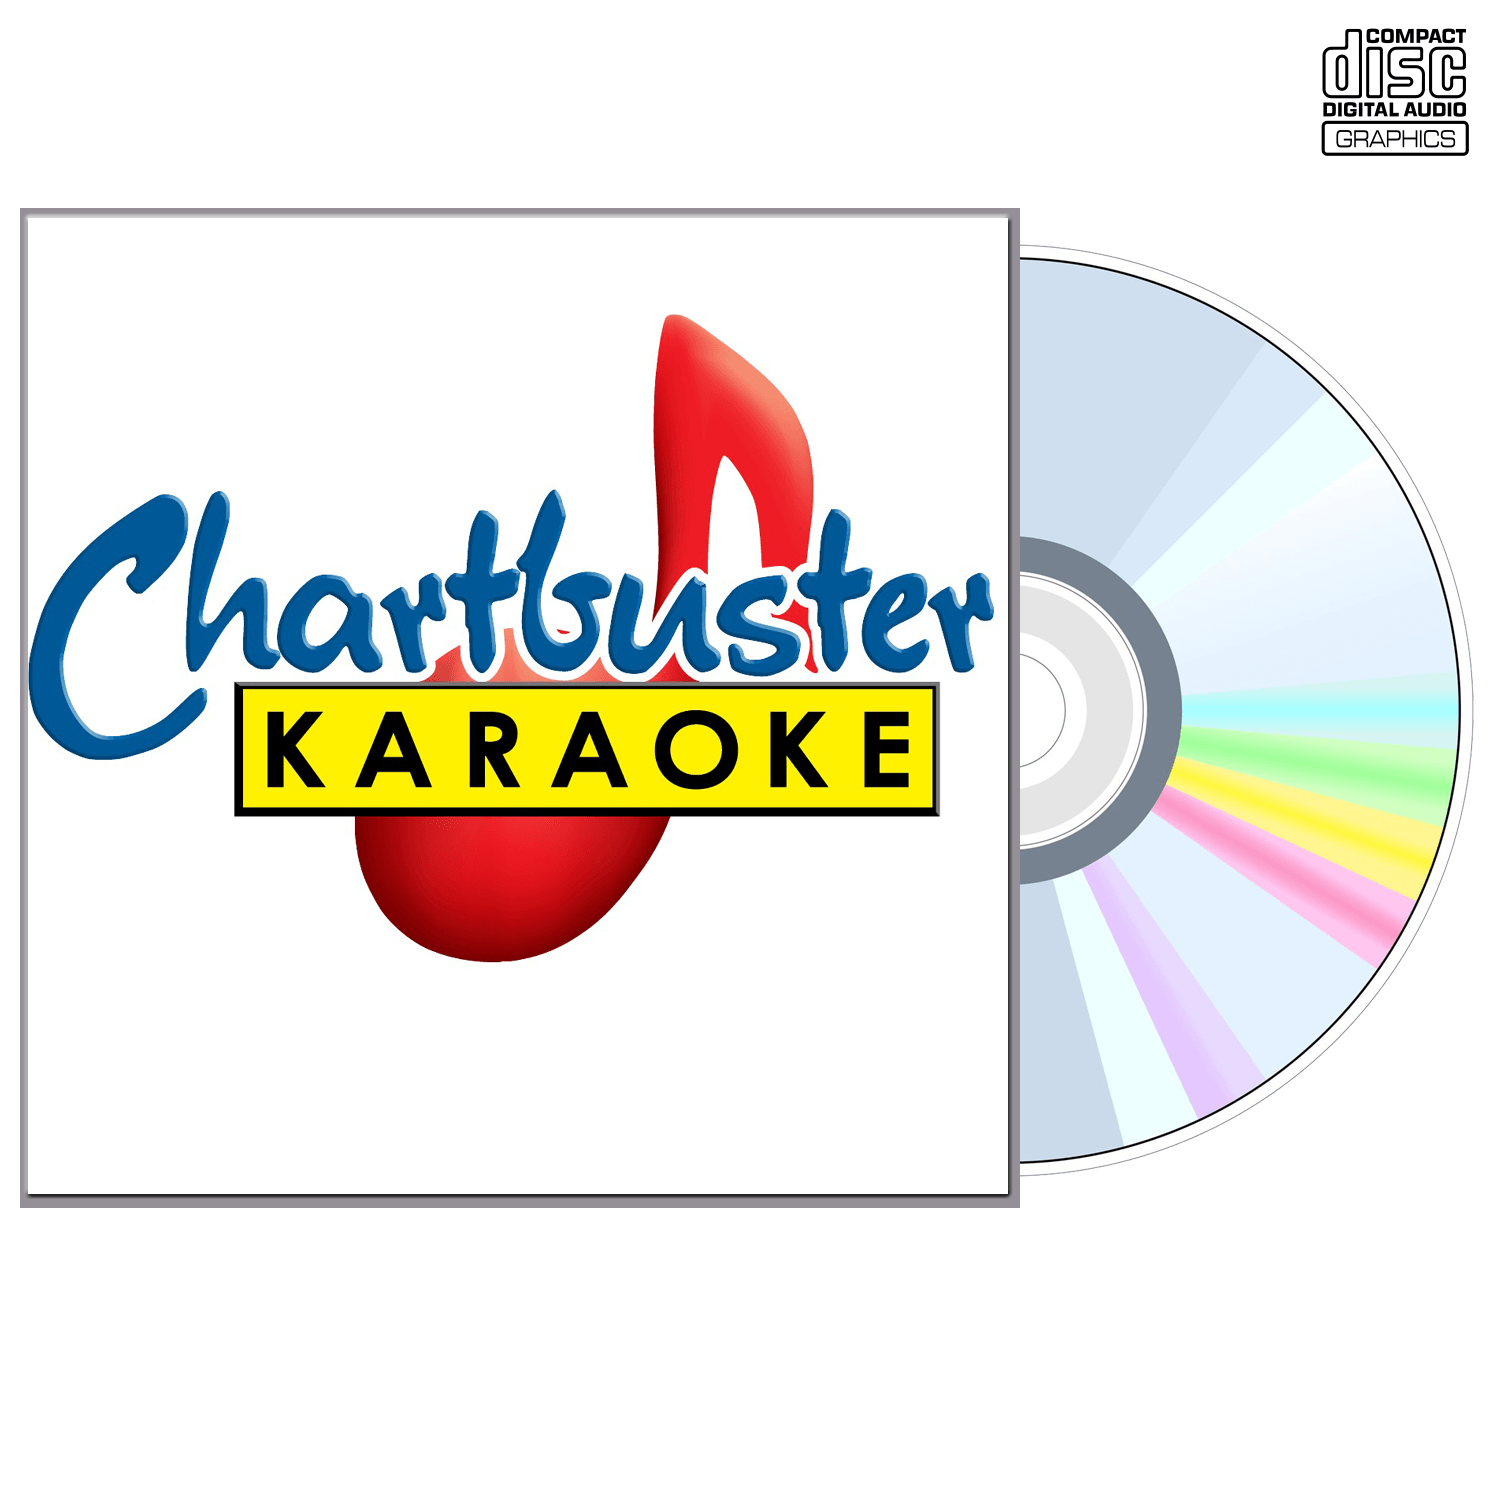 Eddie Rabbitt Vol 2 - CD+G - Chartbuster Karaoke - Karaoke Home Entertainment